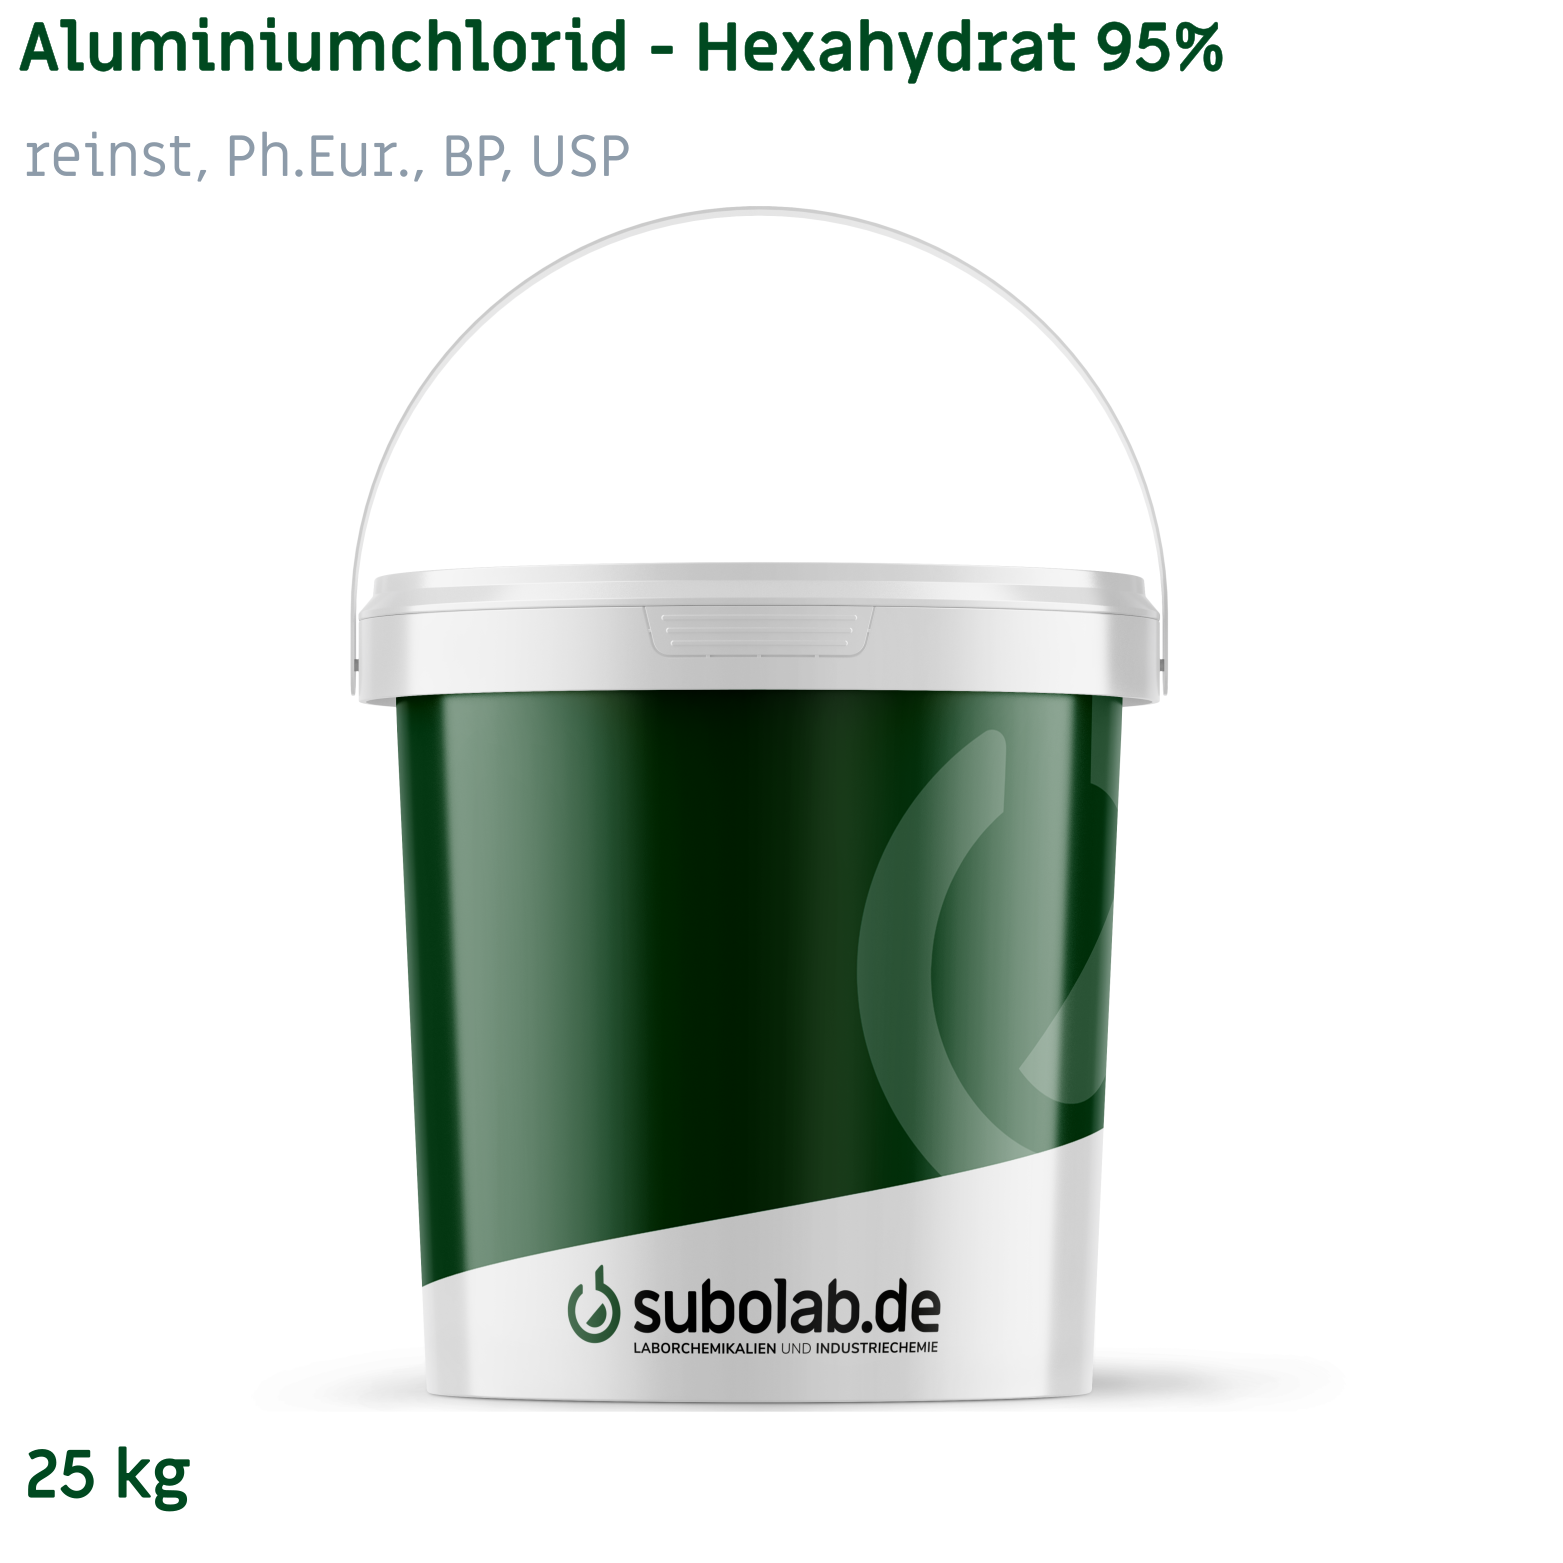 Bild von Aluminiumchlorid - Hexahydrat 95% reinst, Ph.Eur., BP, USP (25 kg)